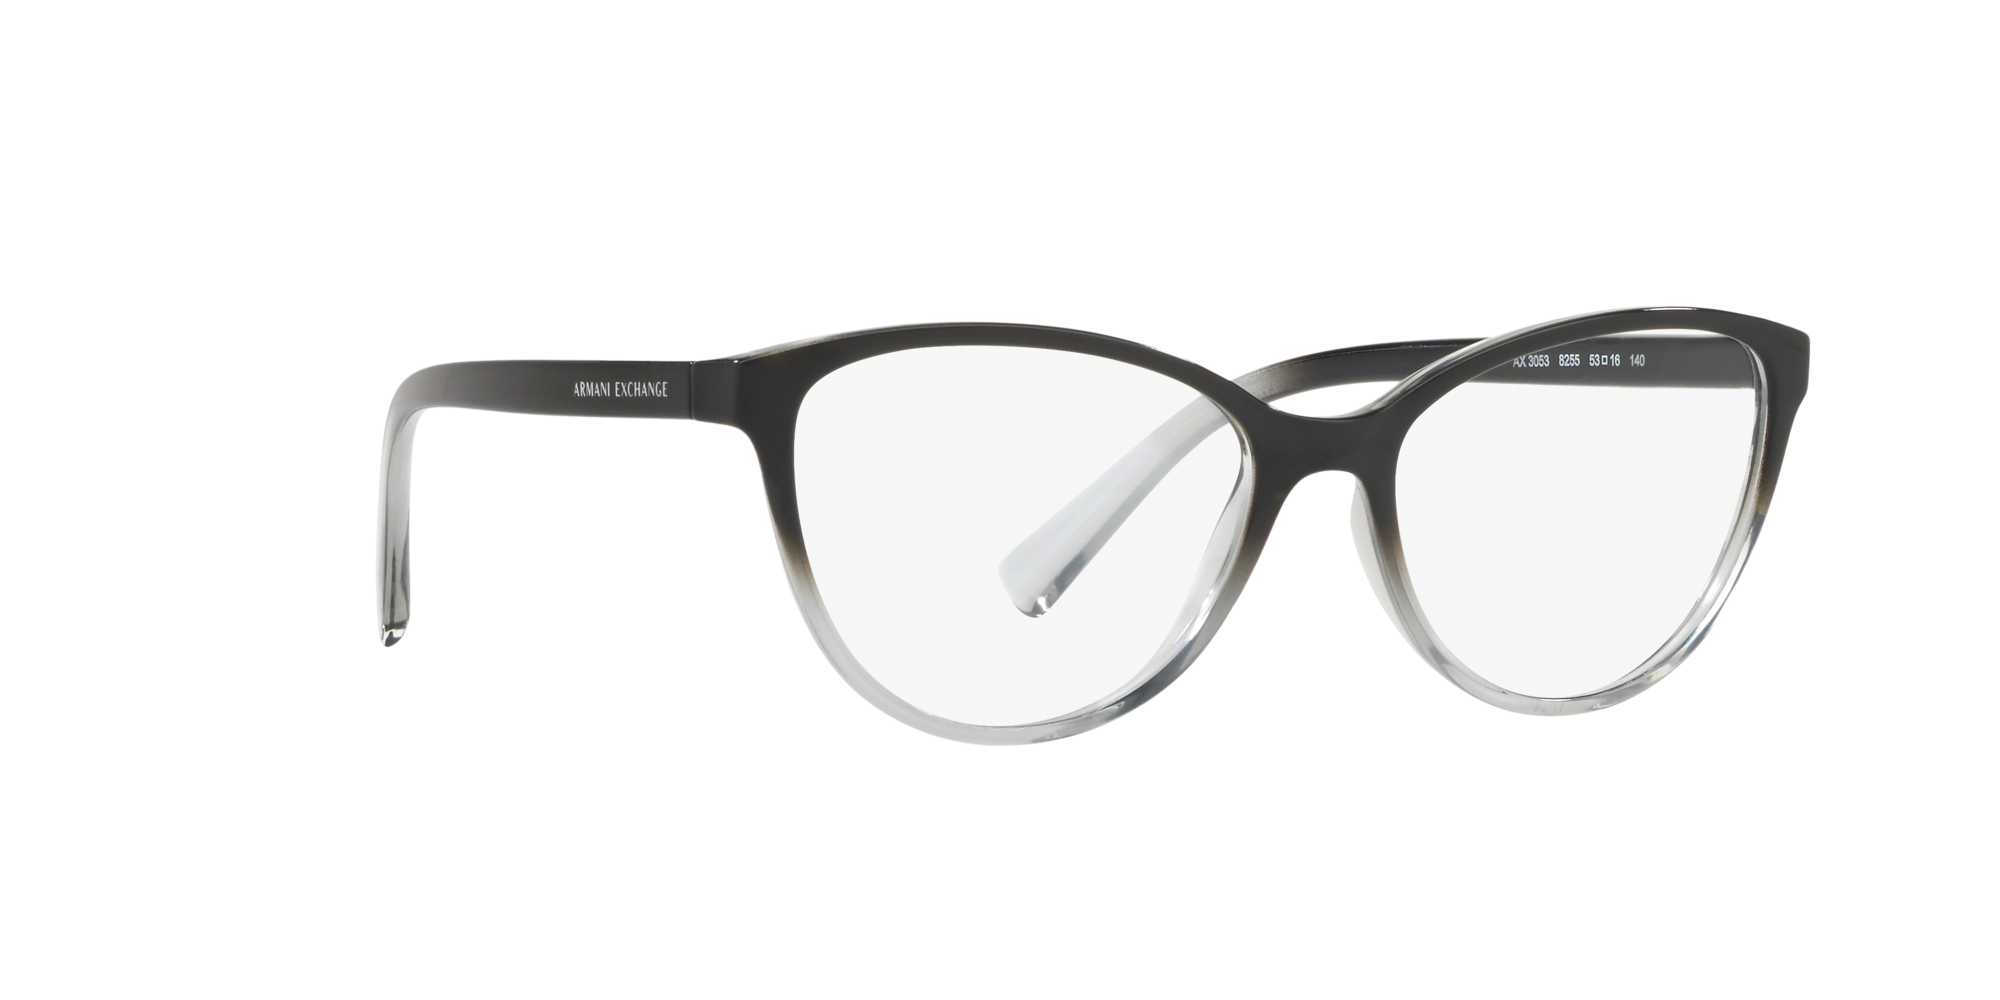 Angle_Right01 Armani Exchange AX 8255 Glasses Transparent / Black